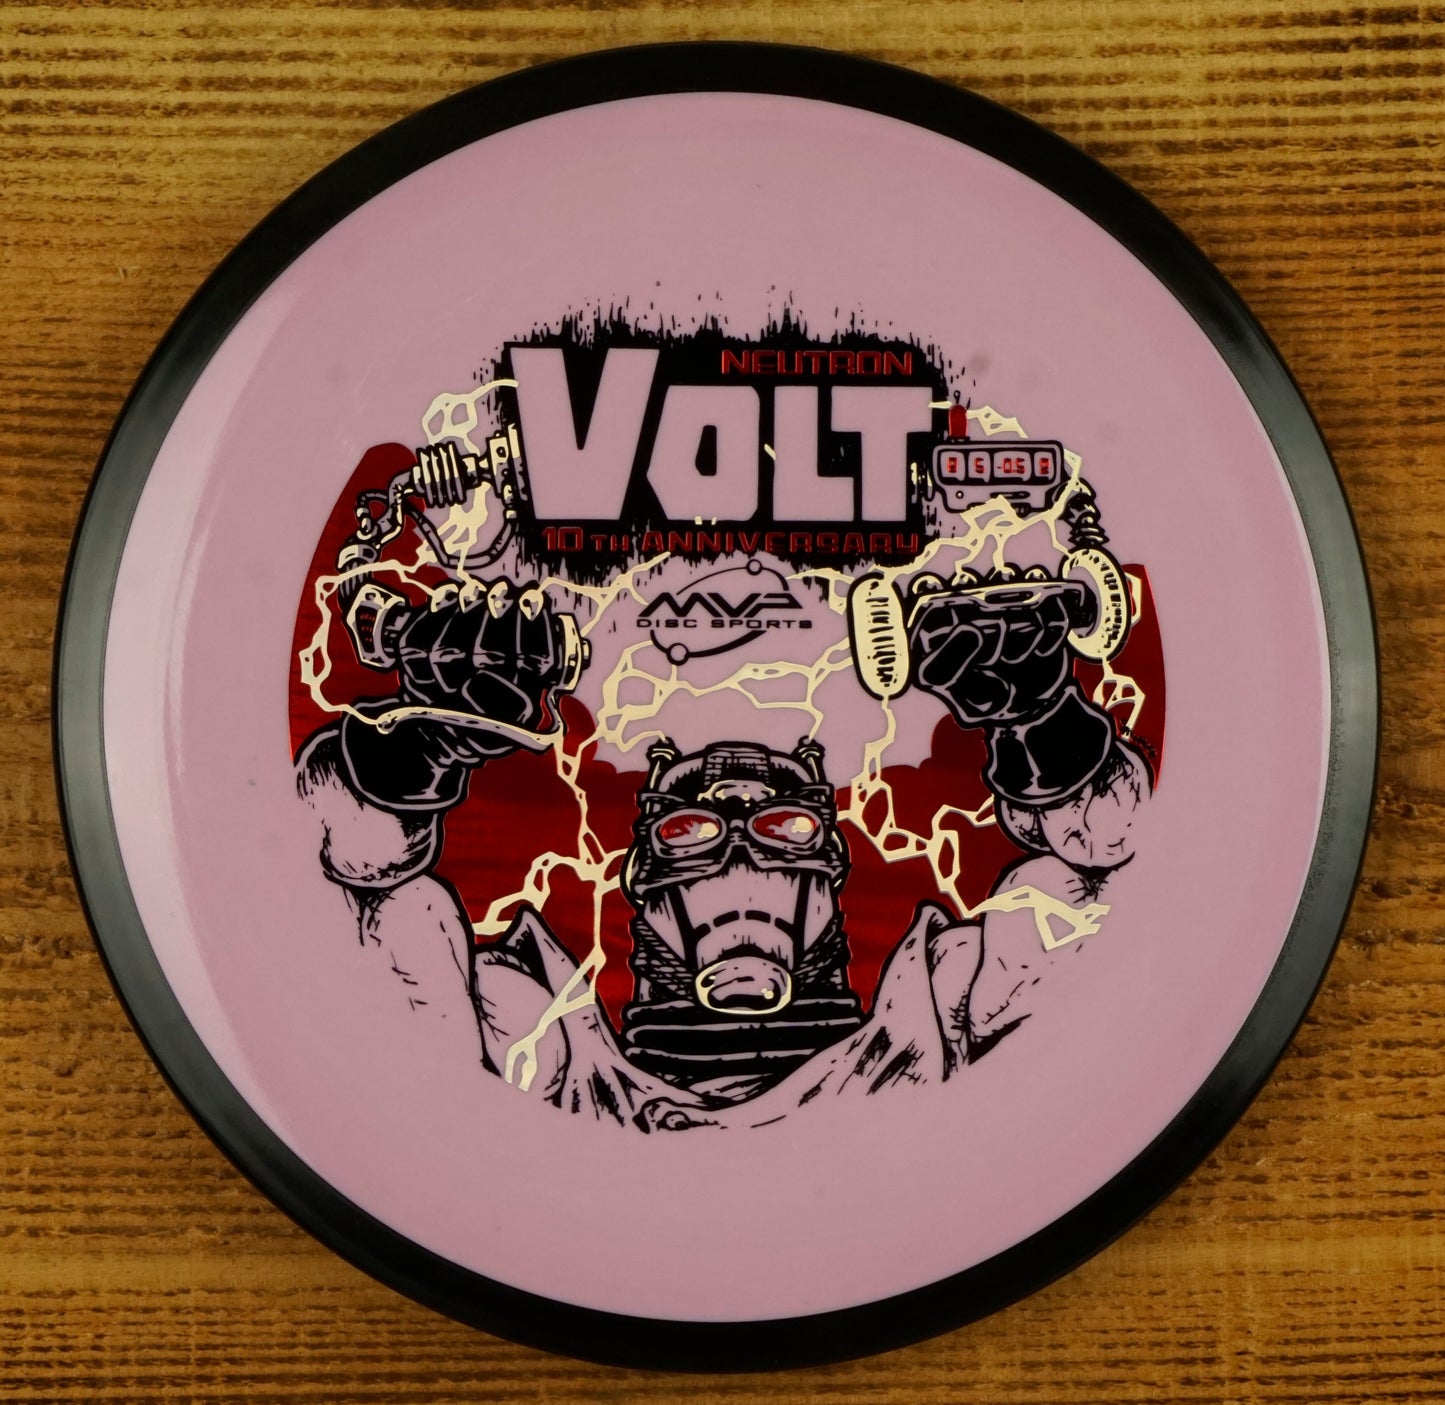 Neutron Volt - Special Edition - 10 year anniversary